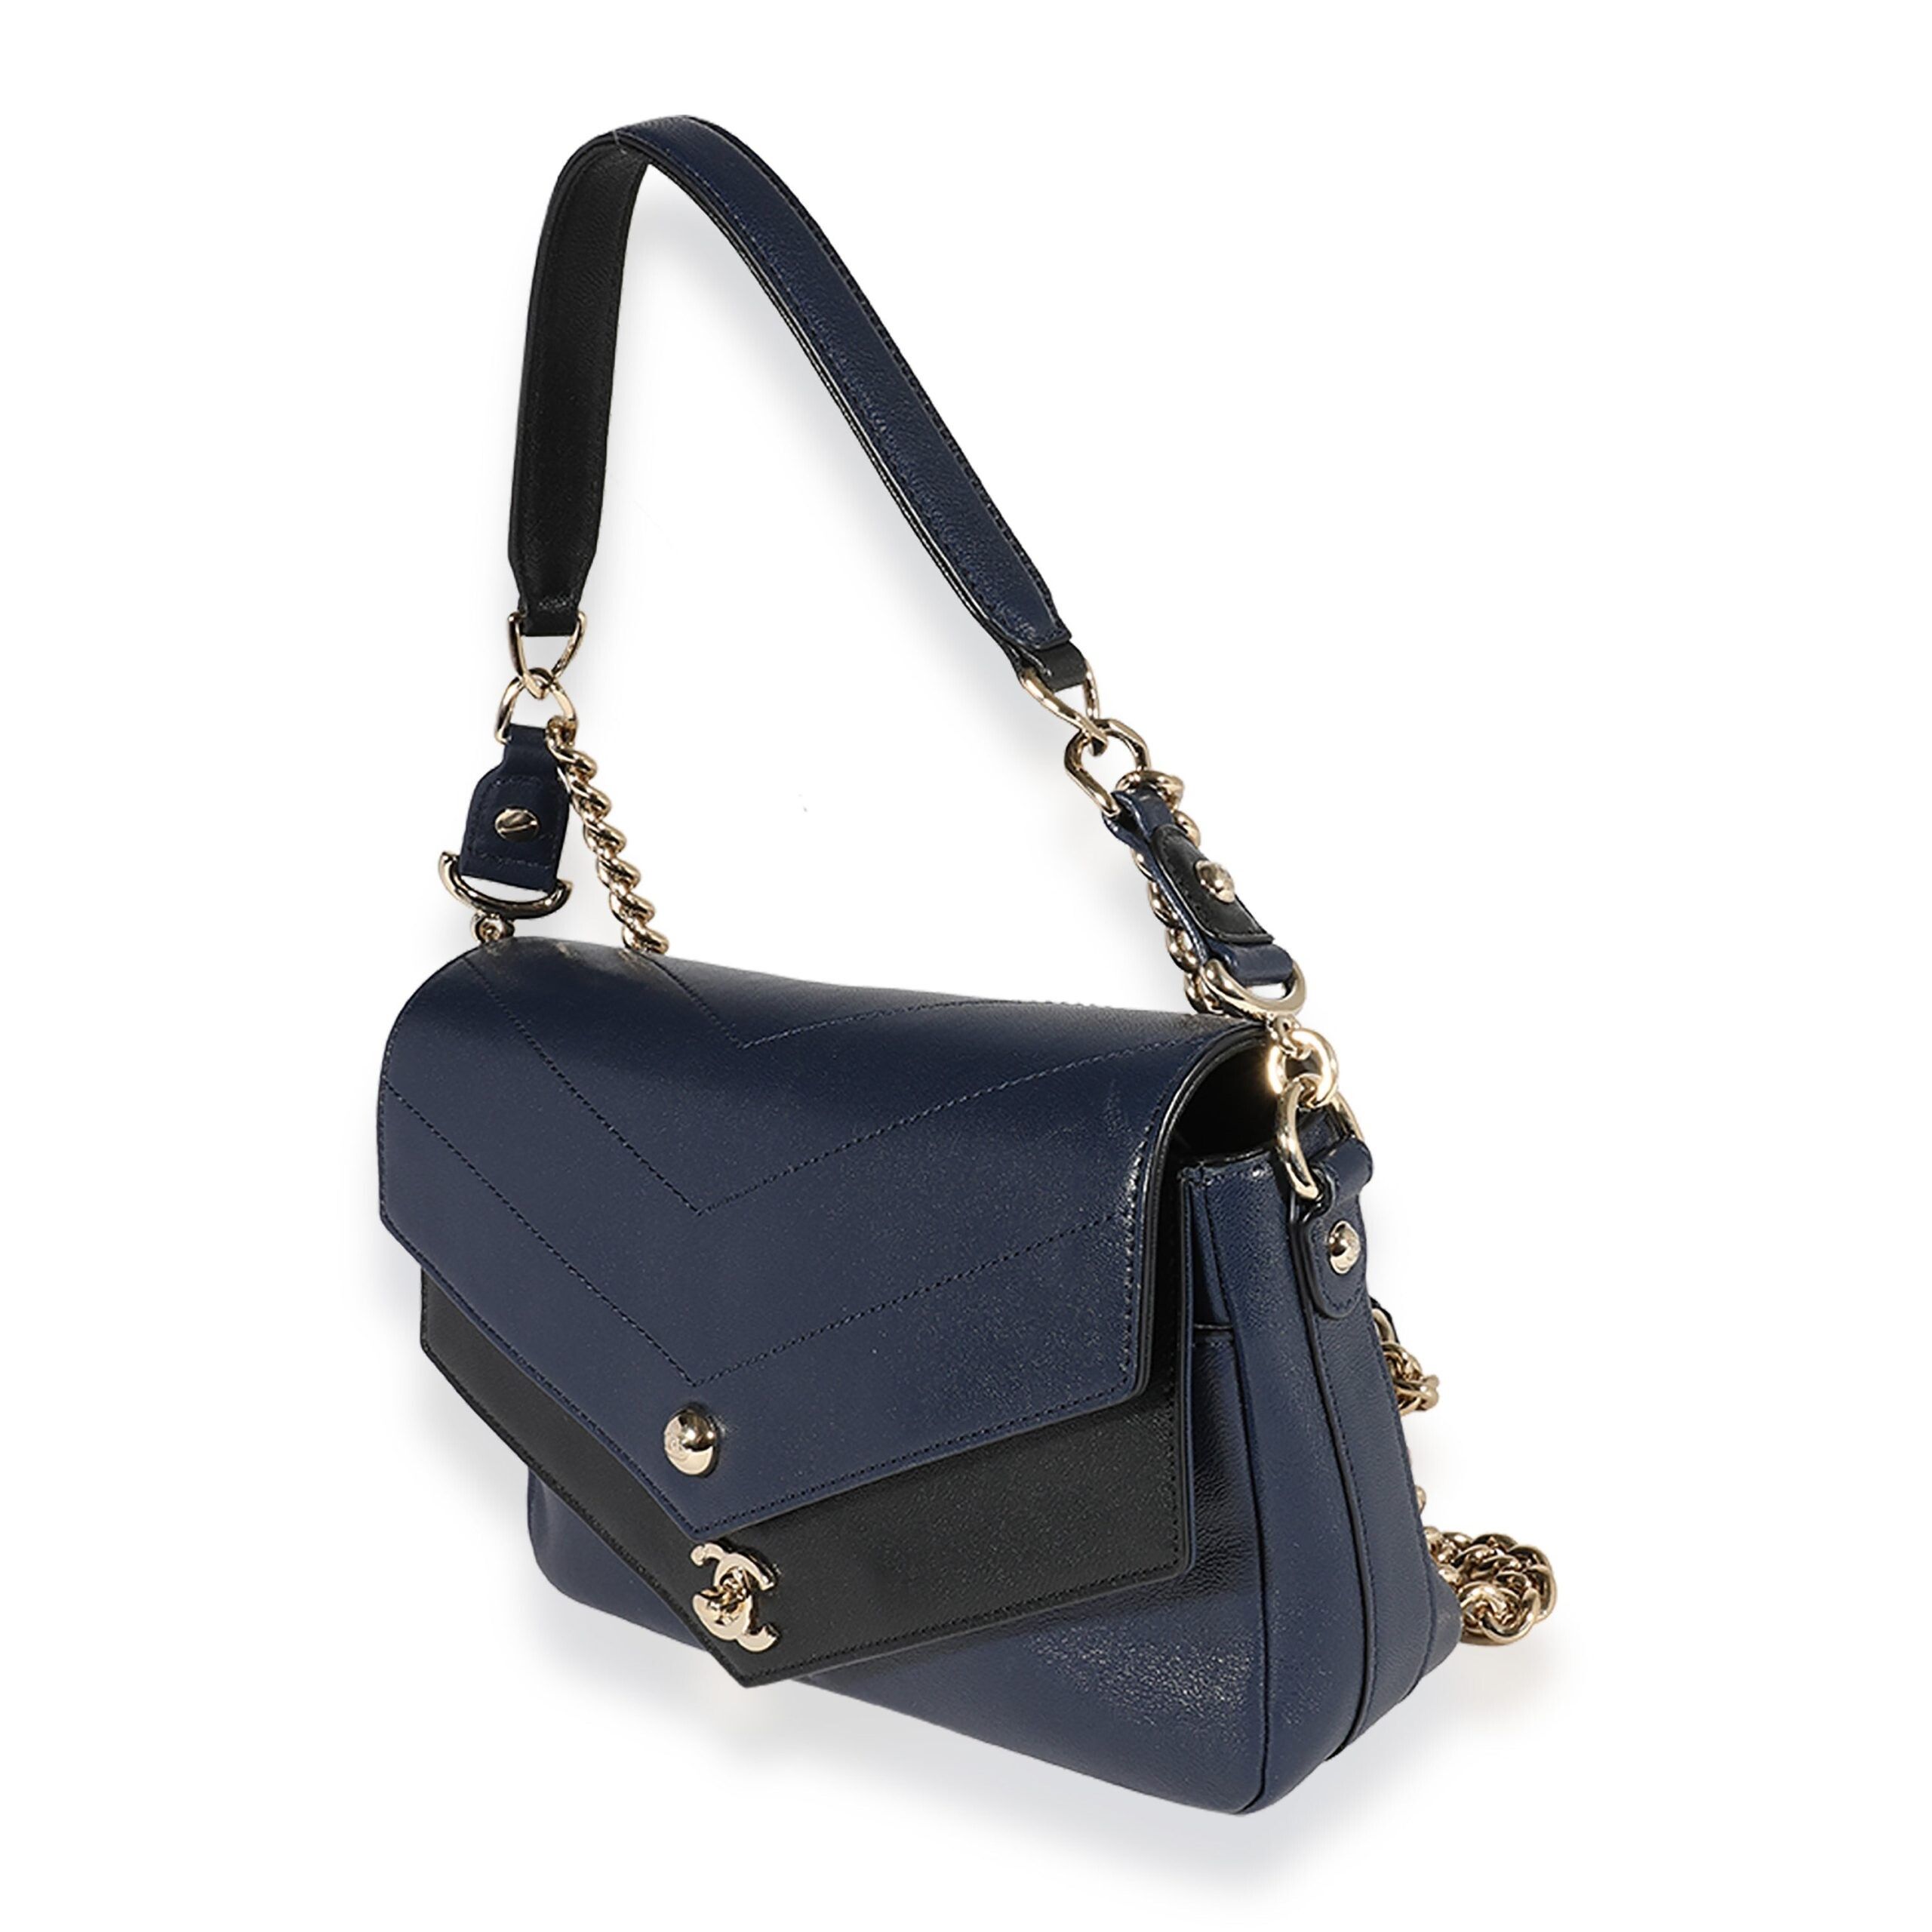 Chanel Chanel Blue & Black Chevron Calfskin Double Envelope Flap Bag Size ONE SIZE - 2 Preview